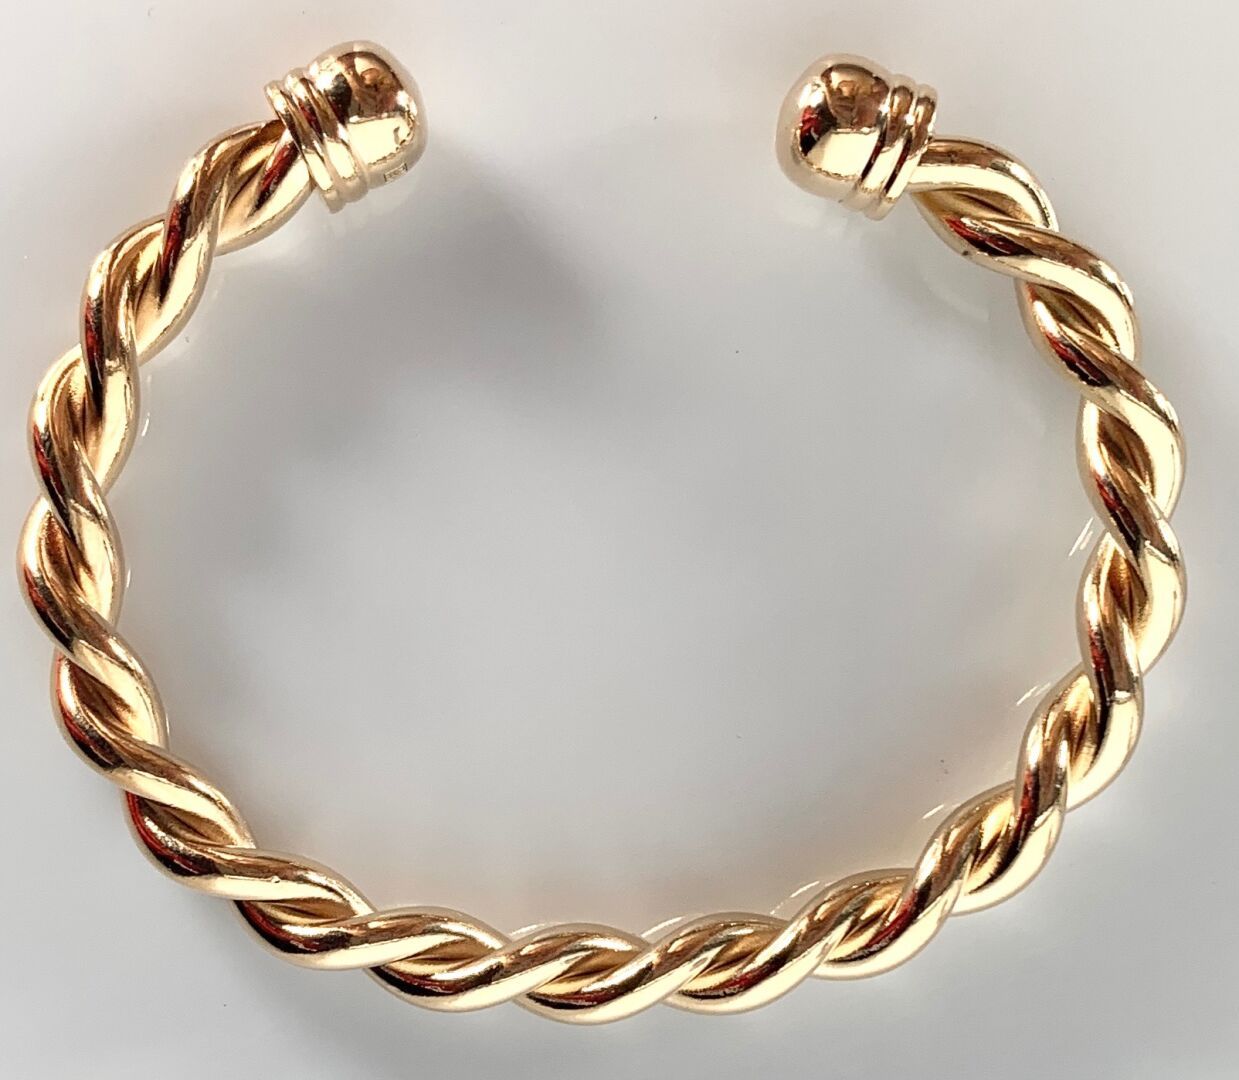 Twisted gold-plated rigid bracelet - D: 16 cm - PB: 35.8…